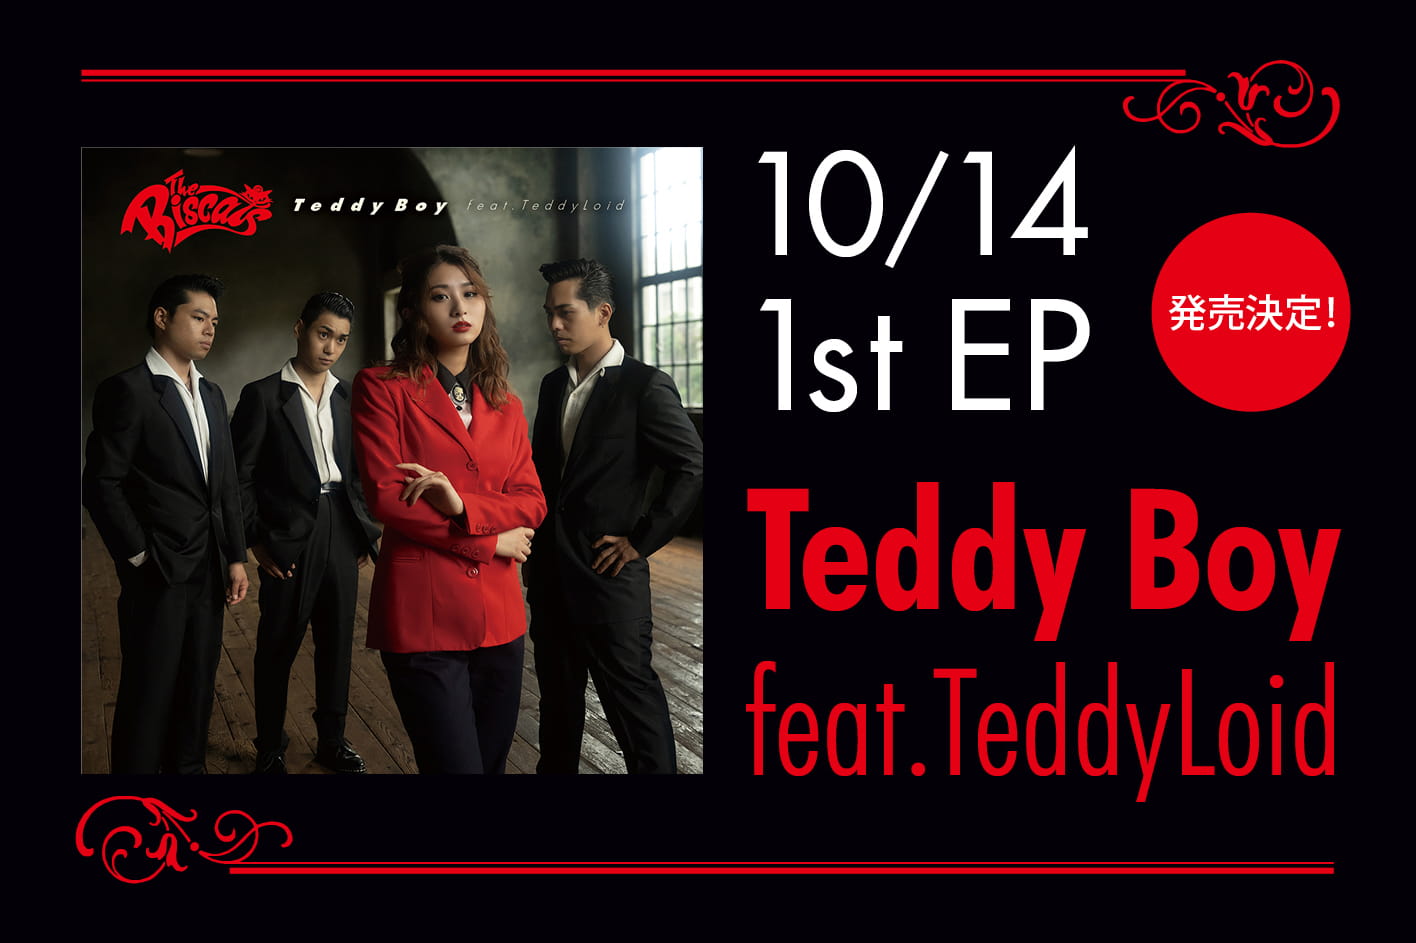 2020/10/14 1st EP Teddy Boy (feat.TeddyLoid)